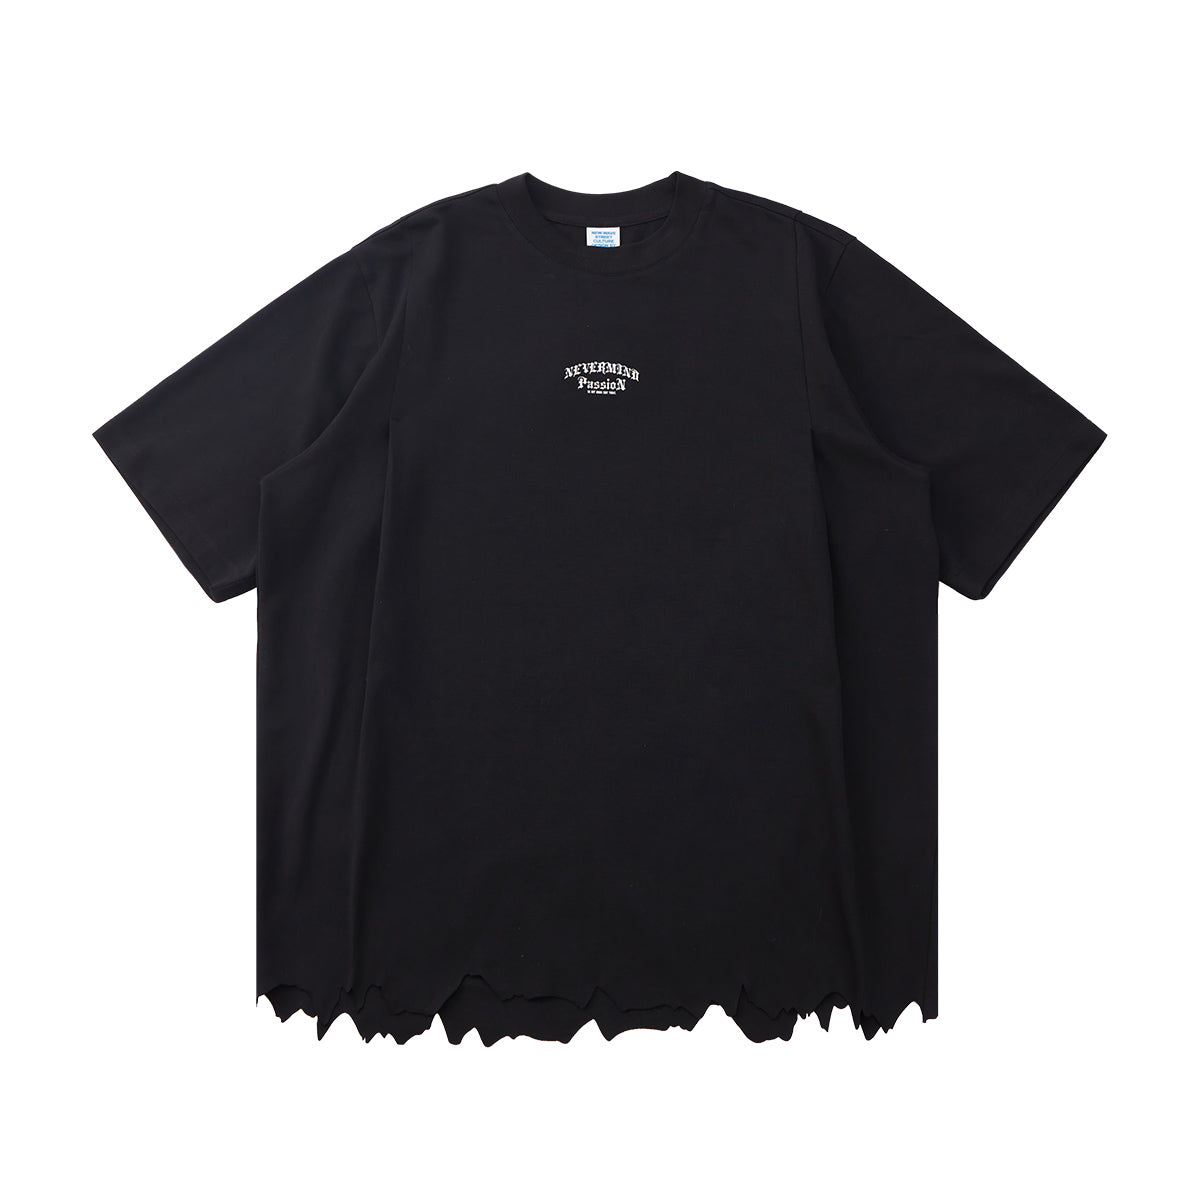 Streetwear Clothing - Black Ripped T-Shirt